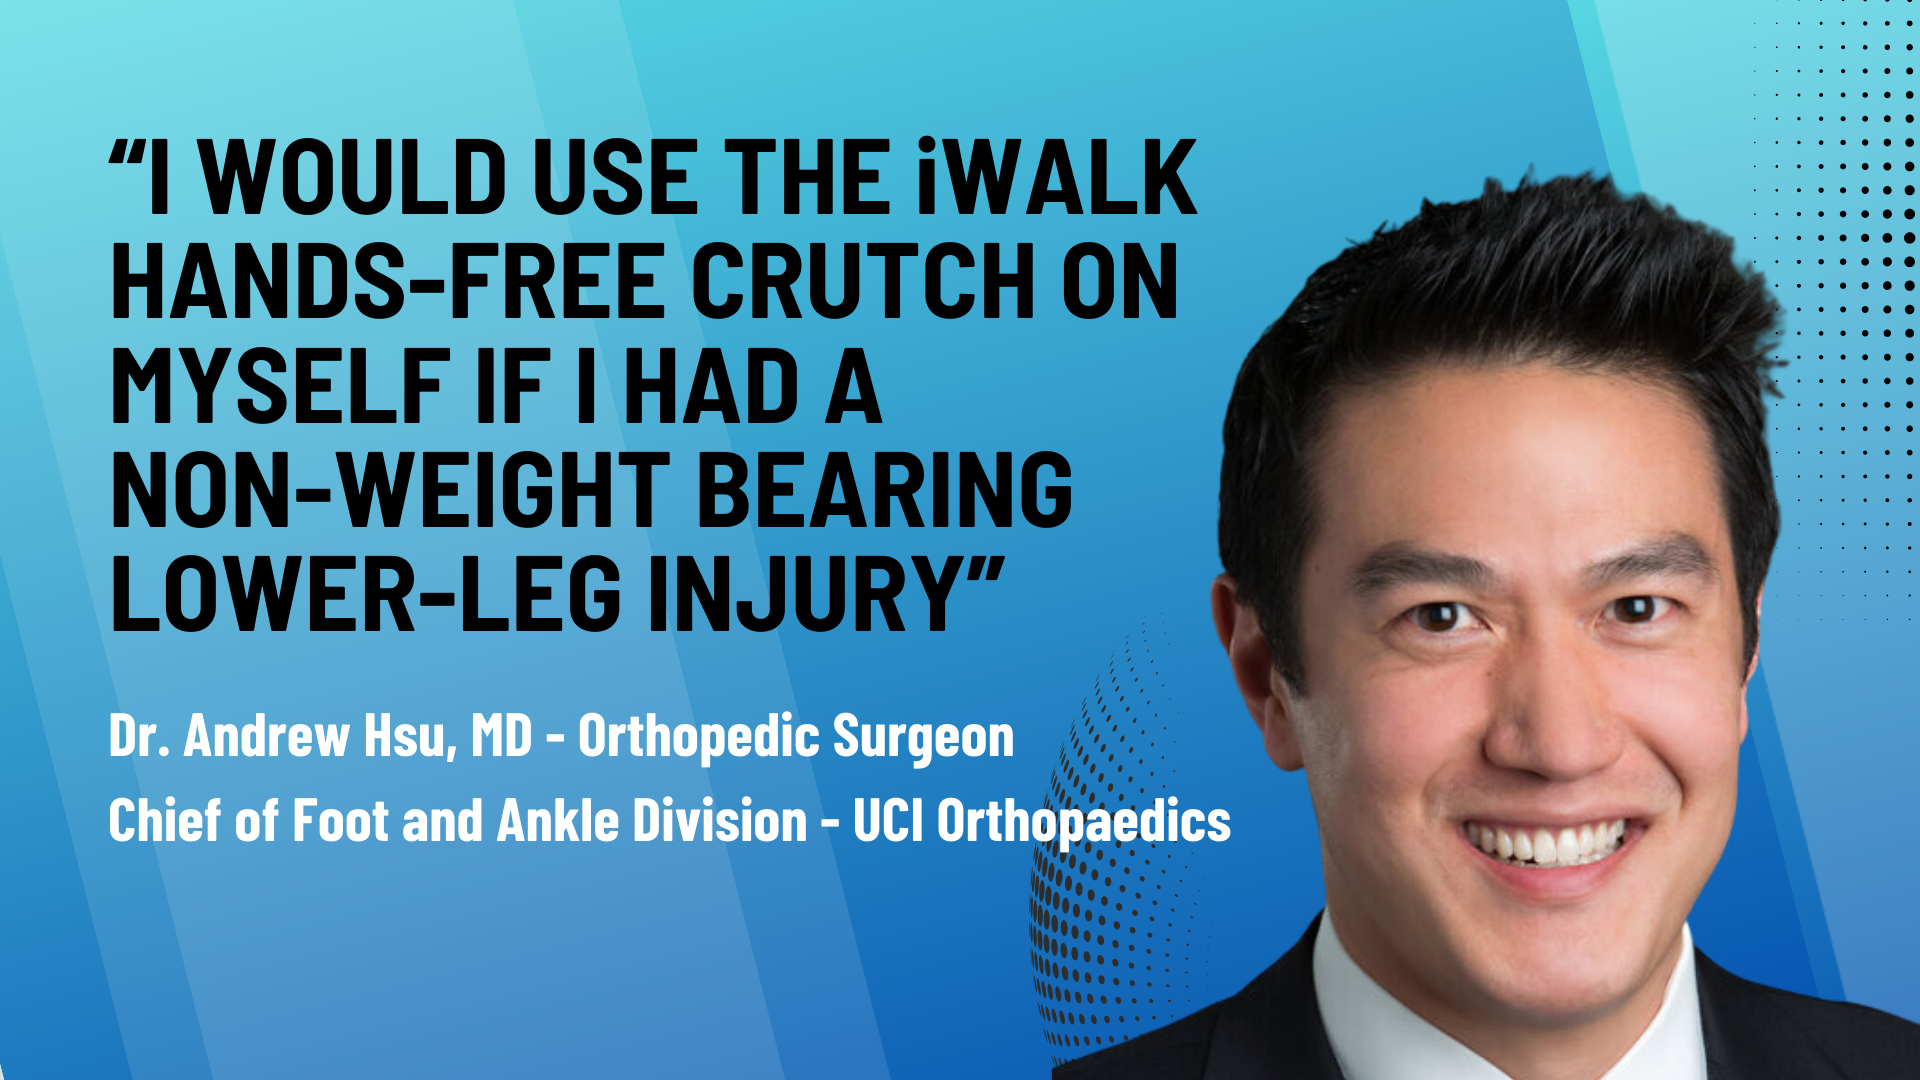 Dr Hsu Recommends the iWALK Hands-Free Crutch